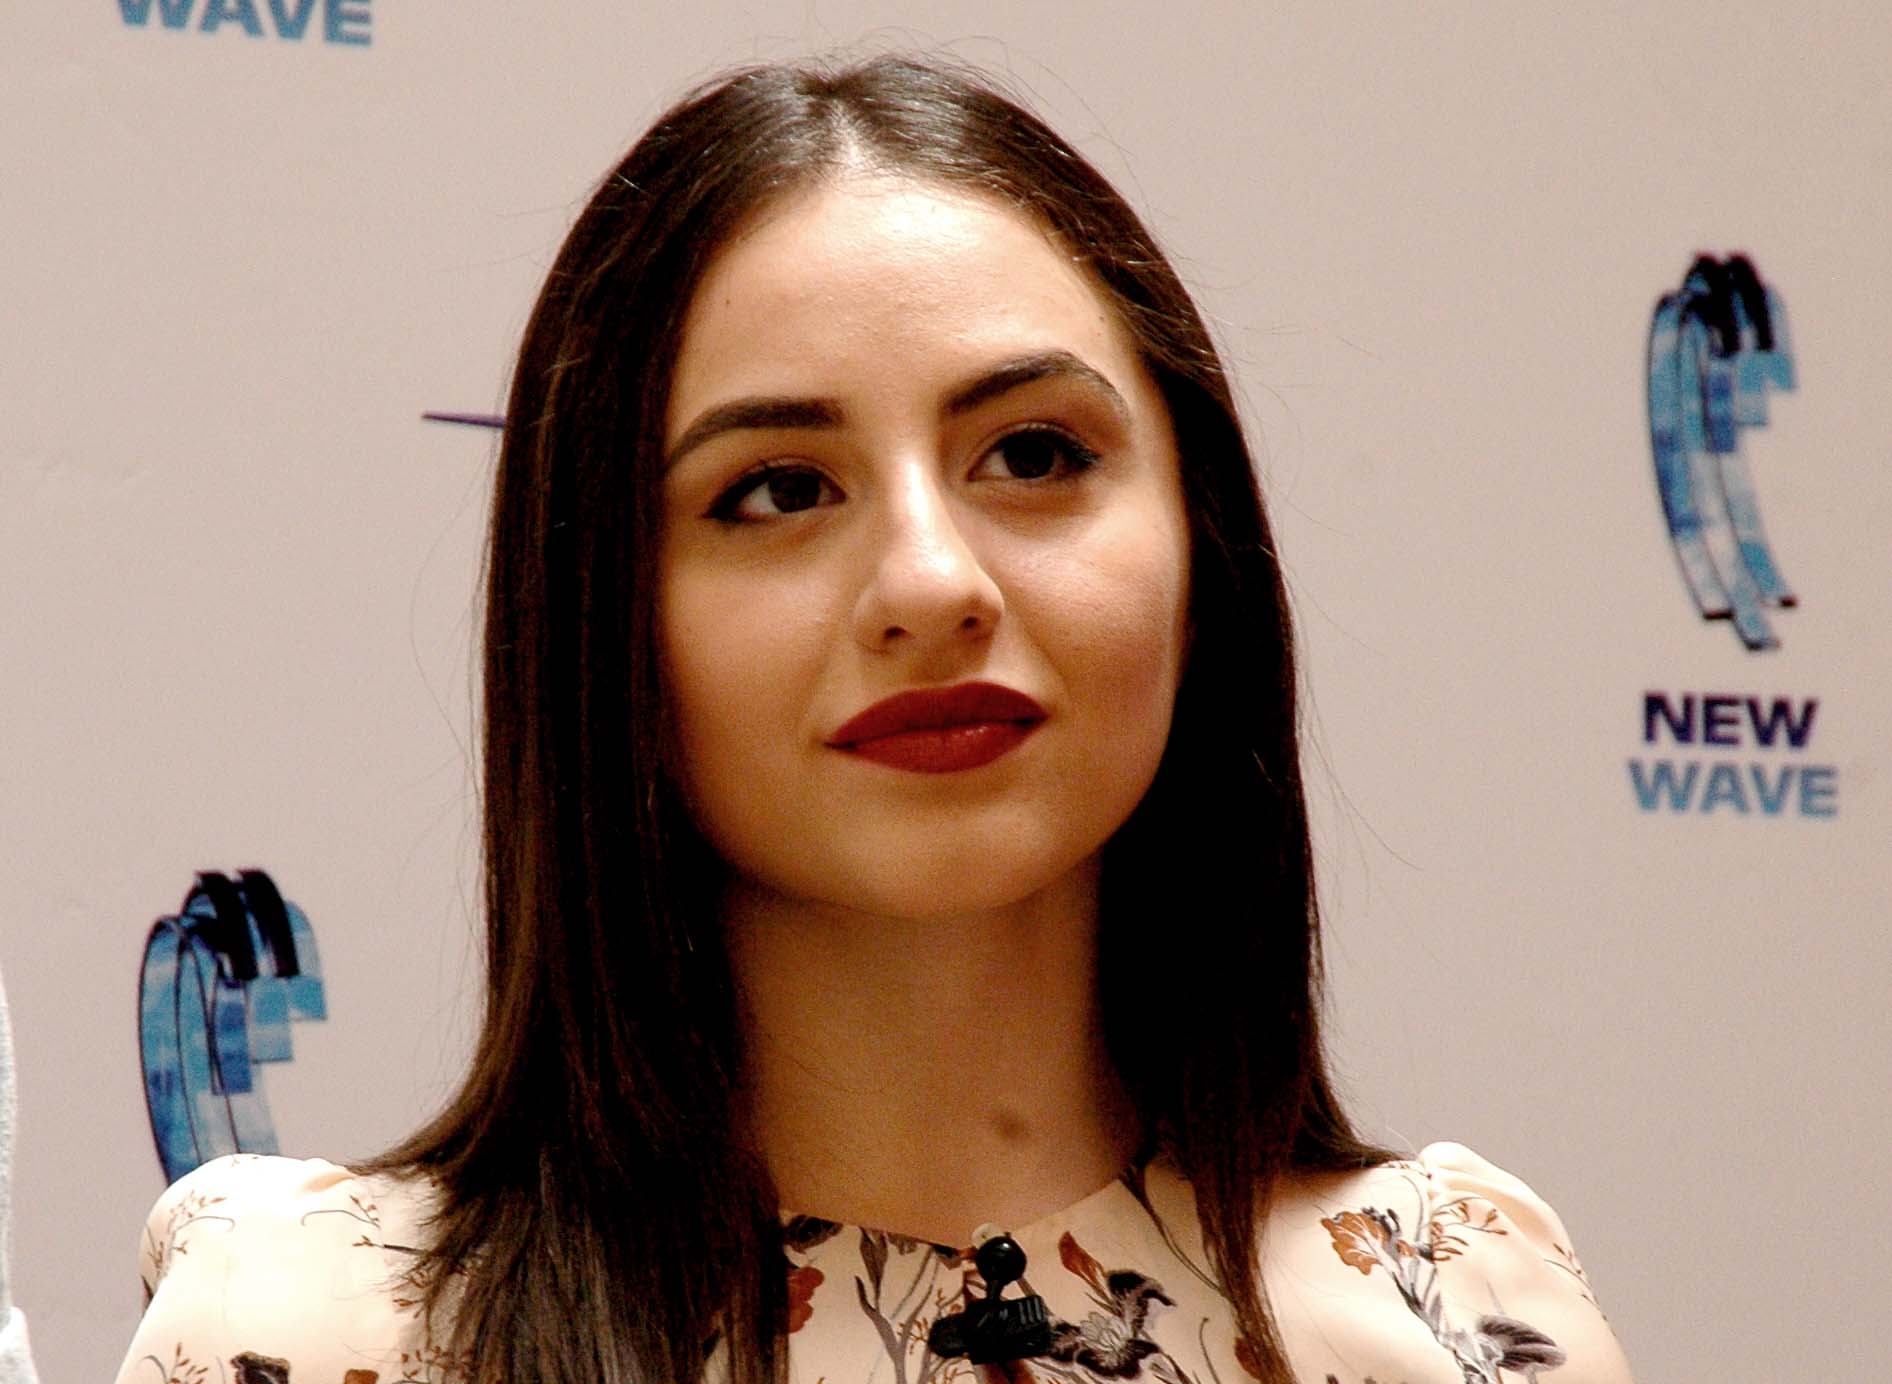 Sona Rubenyan won Audience Award in "New Wave" song contest